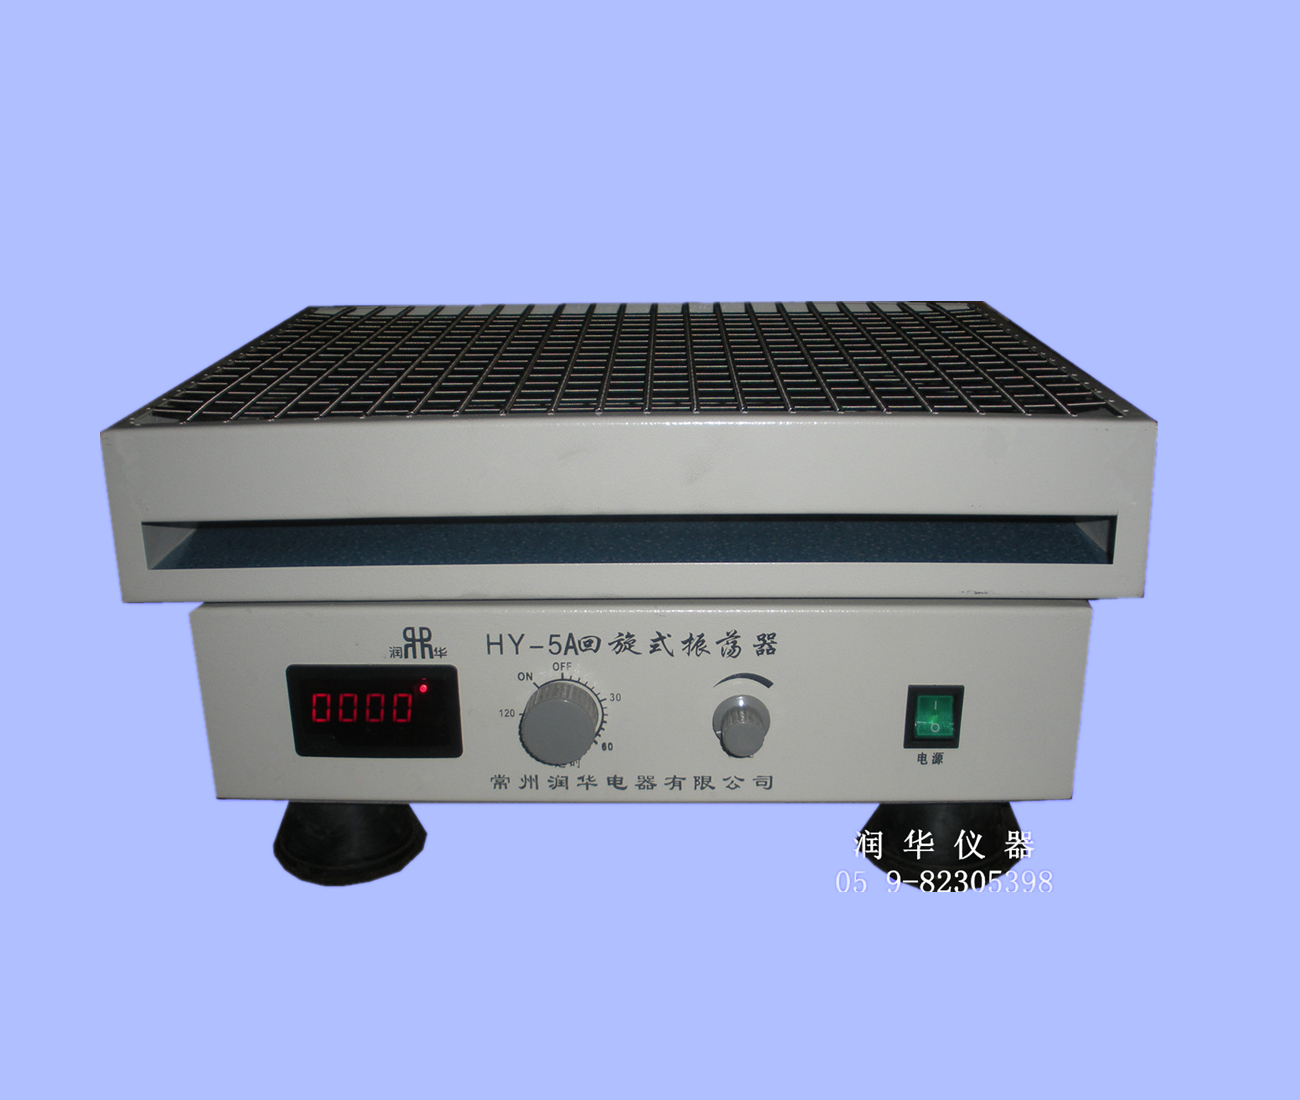 HY-5 (a) adjustable speed multi-purpose oscillator